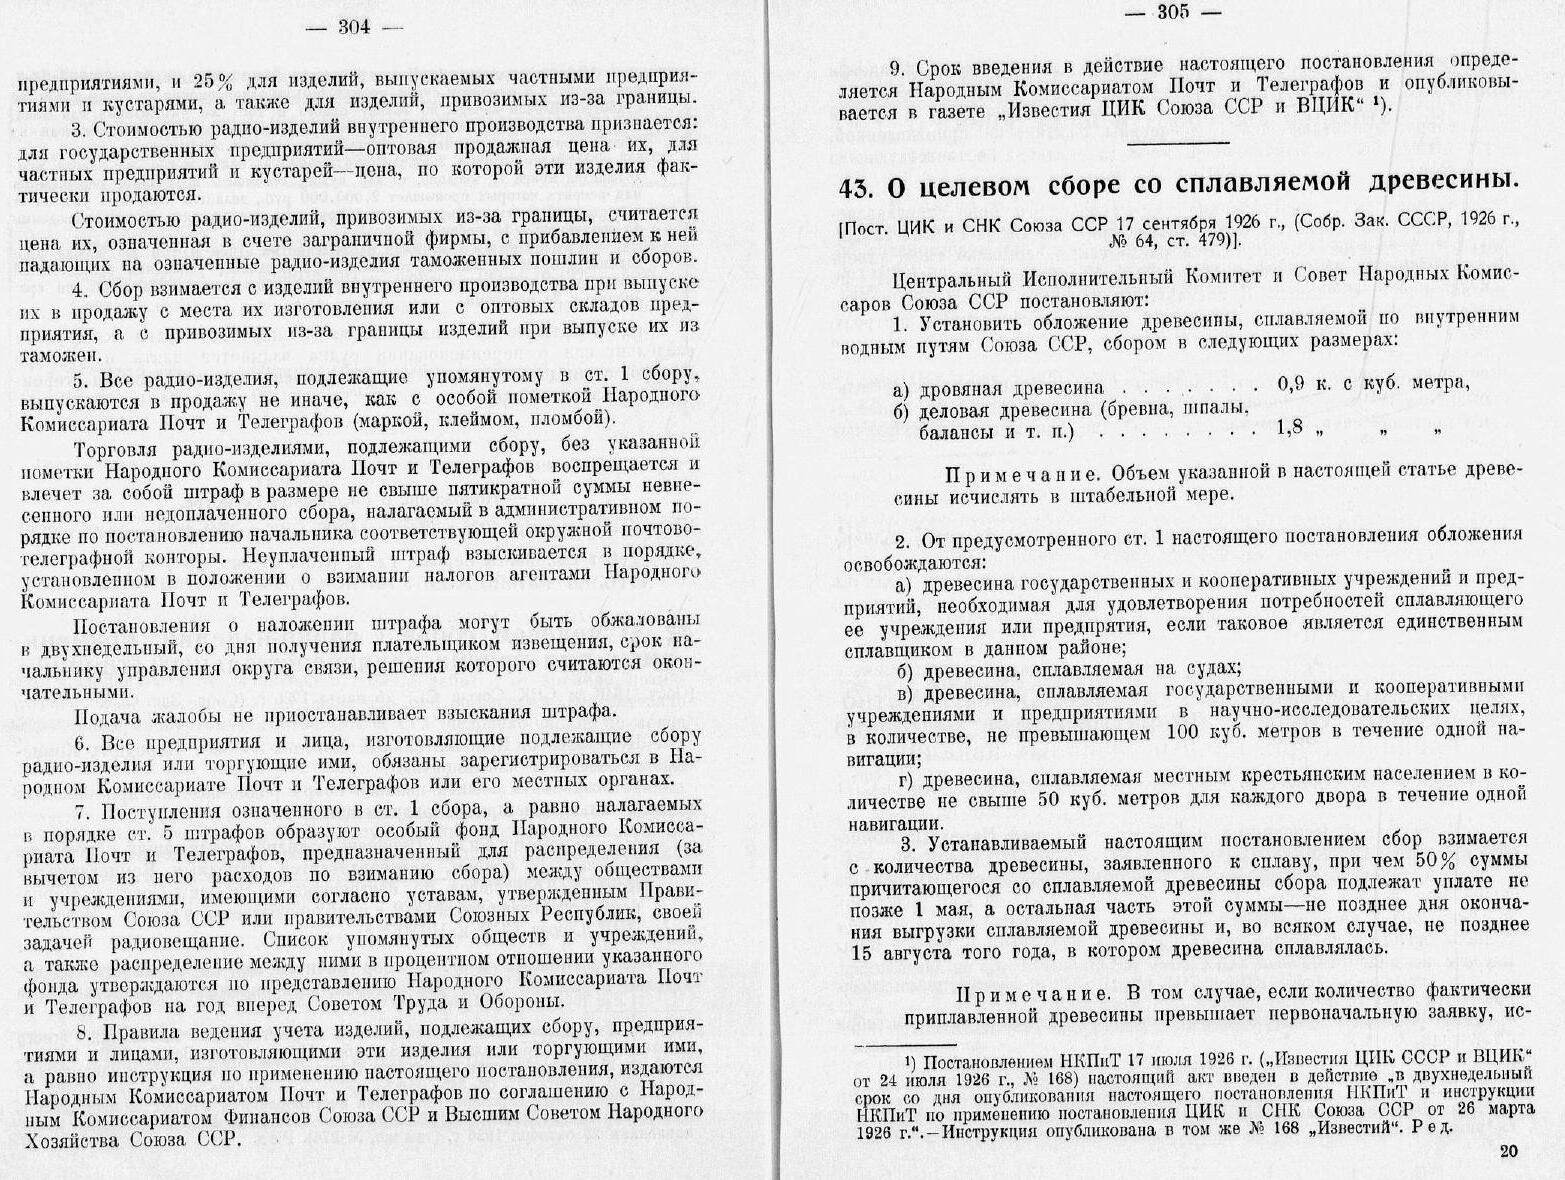 Пост. ЦИК и СНК Союза ССР 26 марта 1926 г.